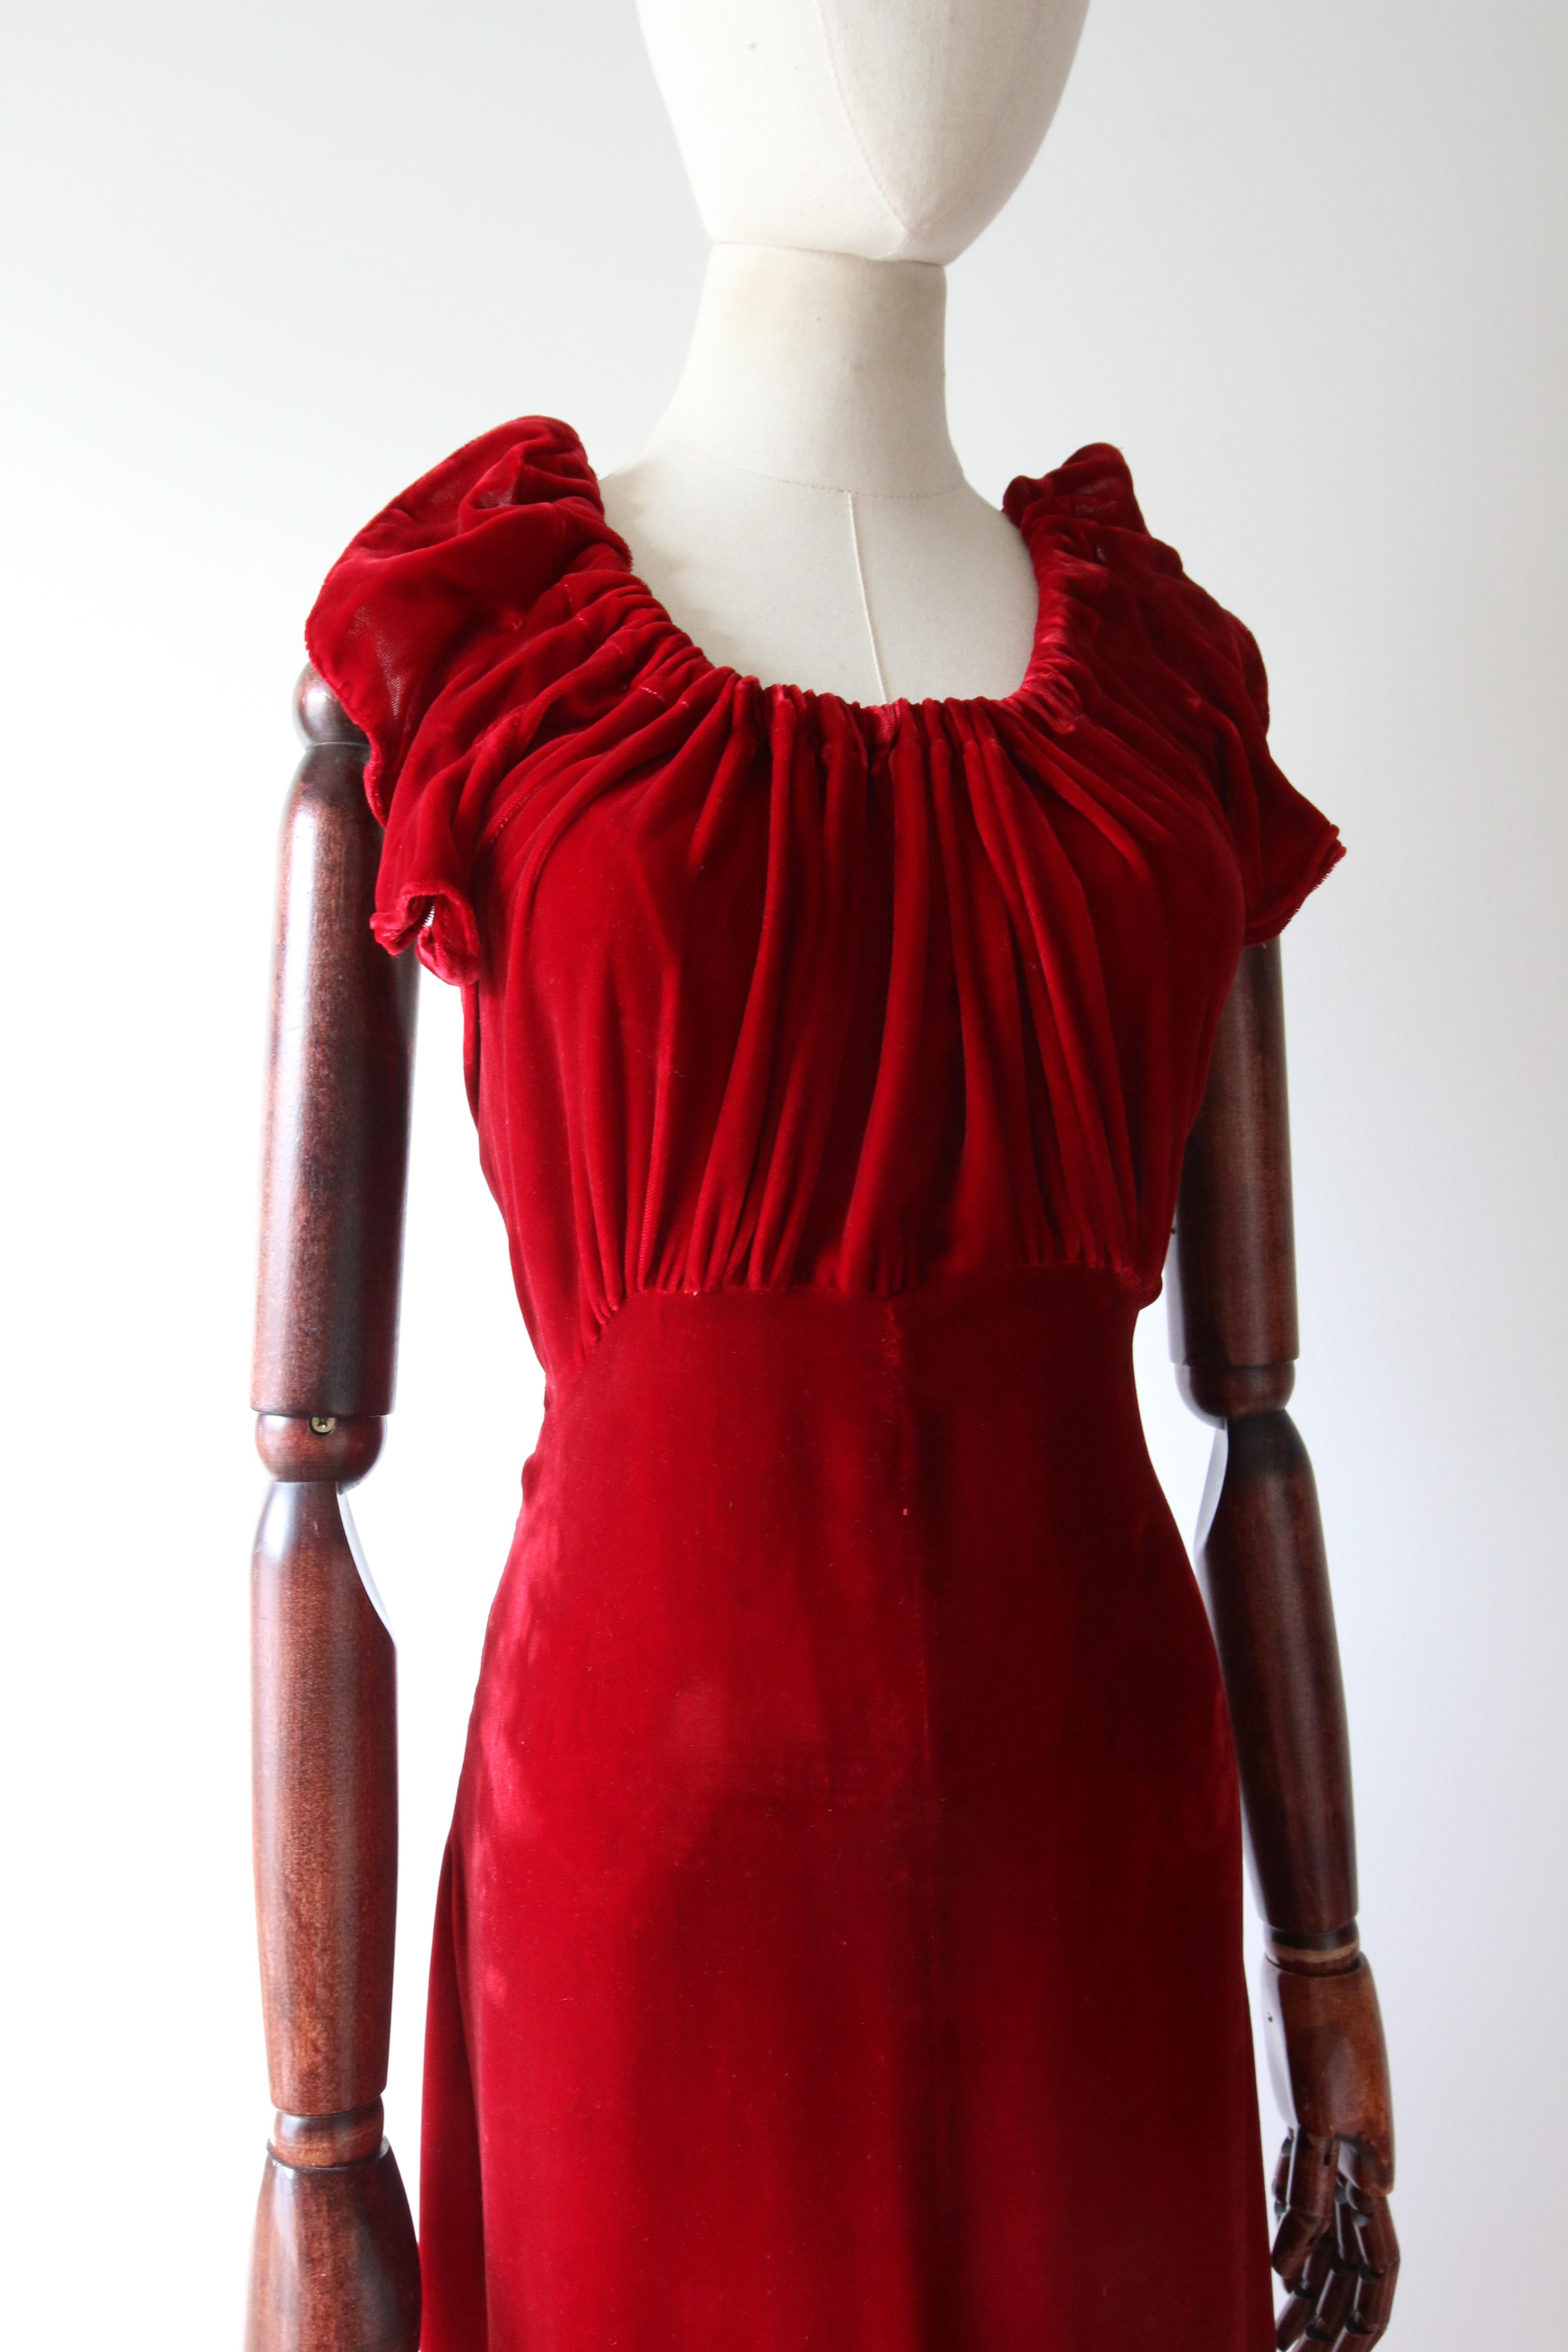 Women's Vintage 1930's red velvet dress and jacket 1930's bias cut UK 6- 8 US 2-4 For Sale